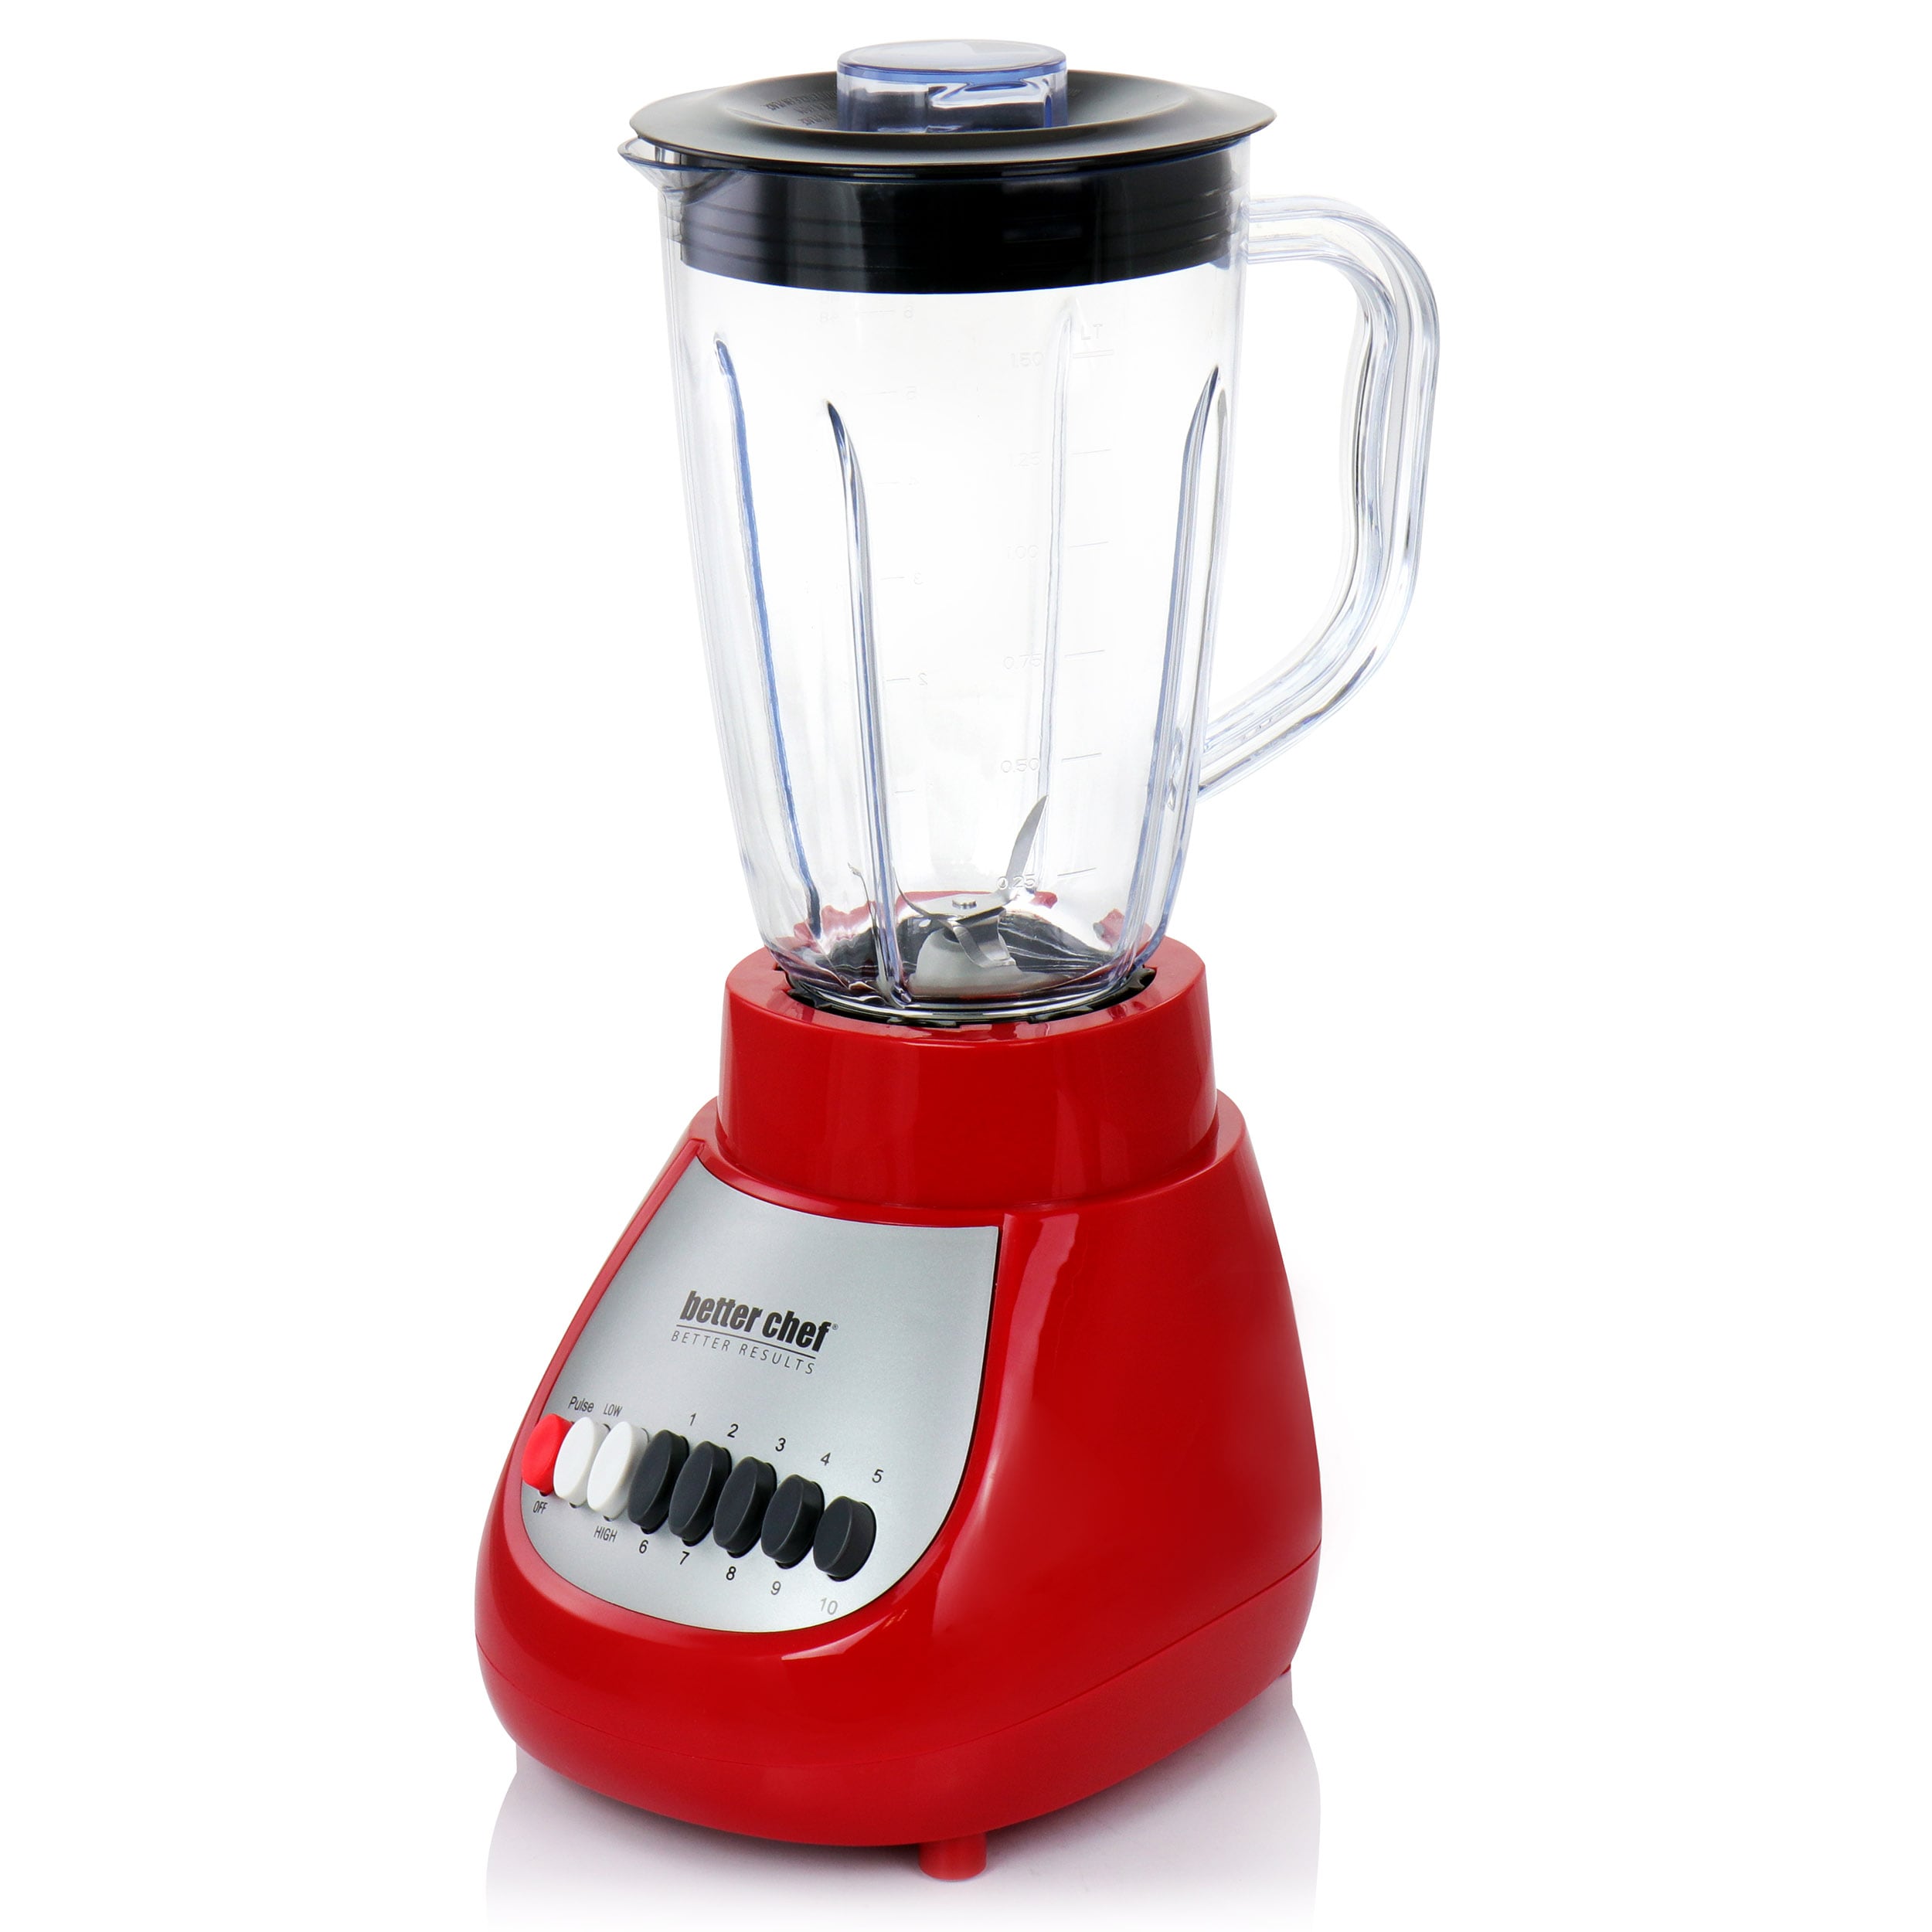 Better Chef 50-oz Red 350-Watt Pulse Control Blender in the